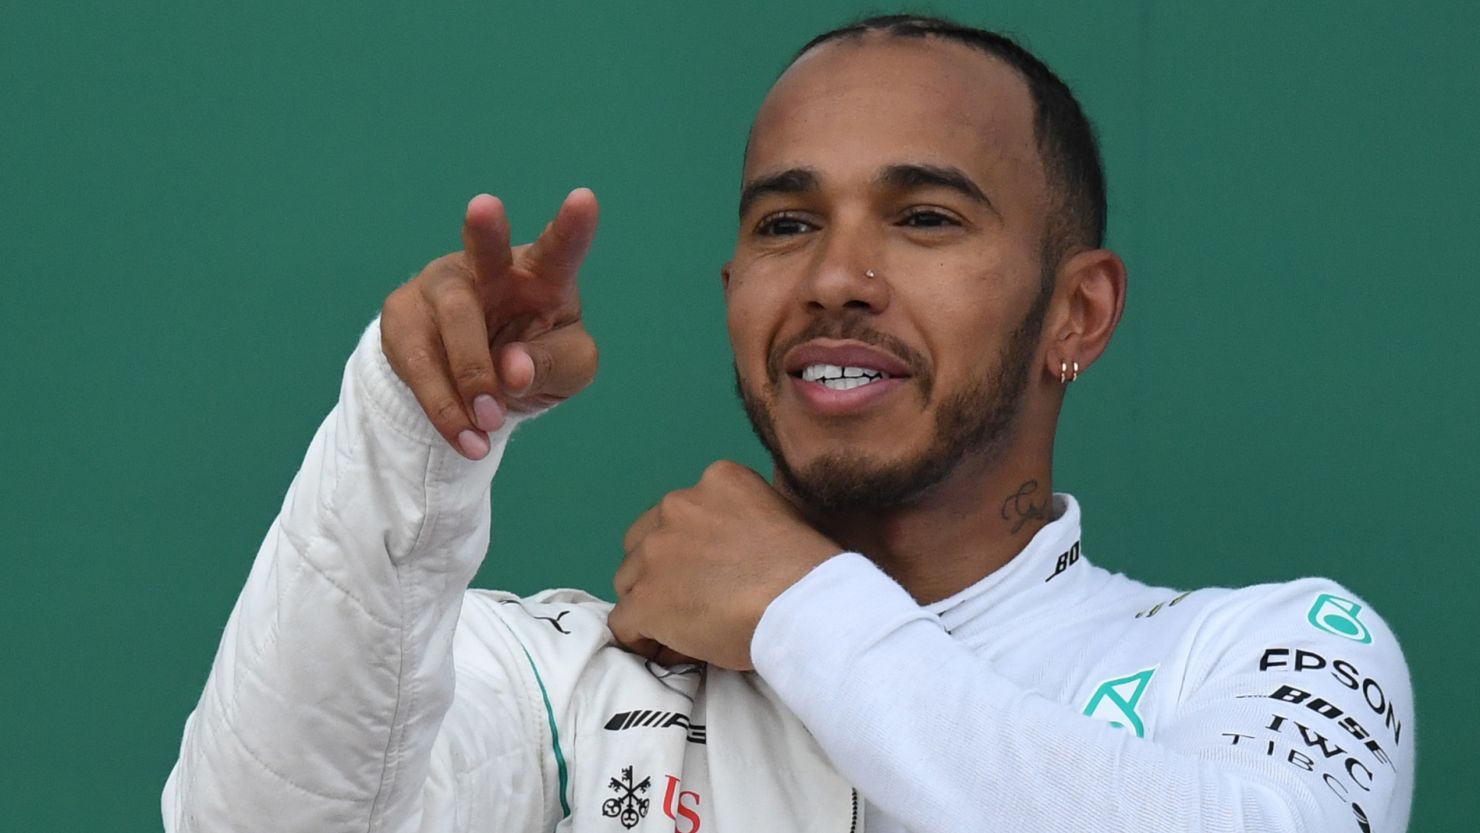 Lewis Hamilton celebrates an unlikely triumph at the Azerbaijan Grand Prix.